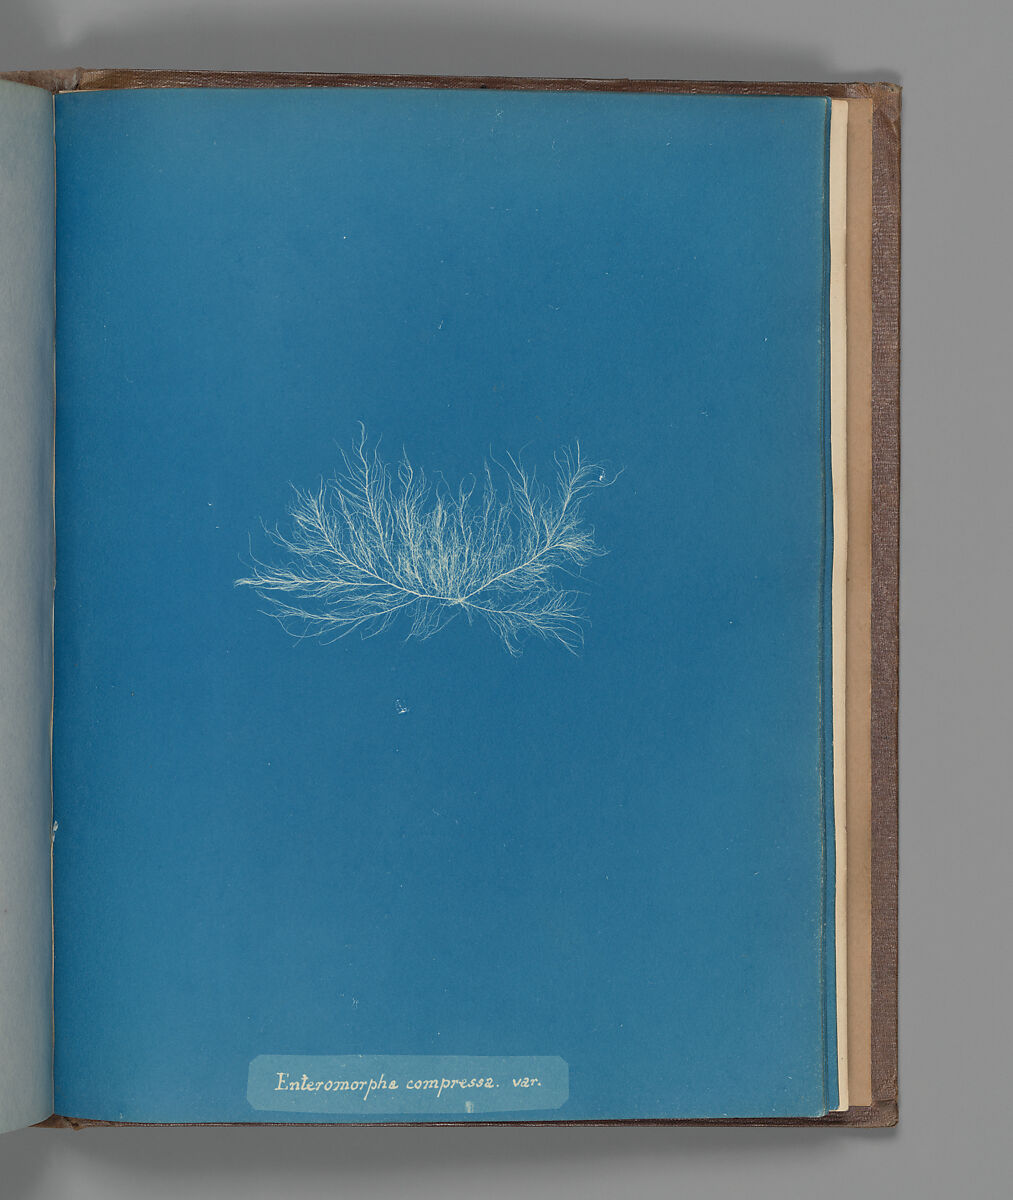 Enteromorpha compressa, var., Anna Atkins (British, 1799–1871), Cyanotype 